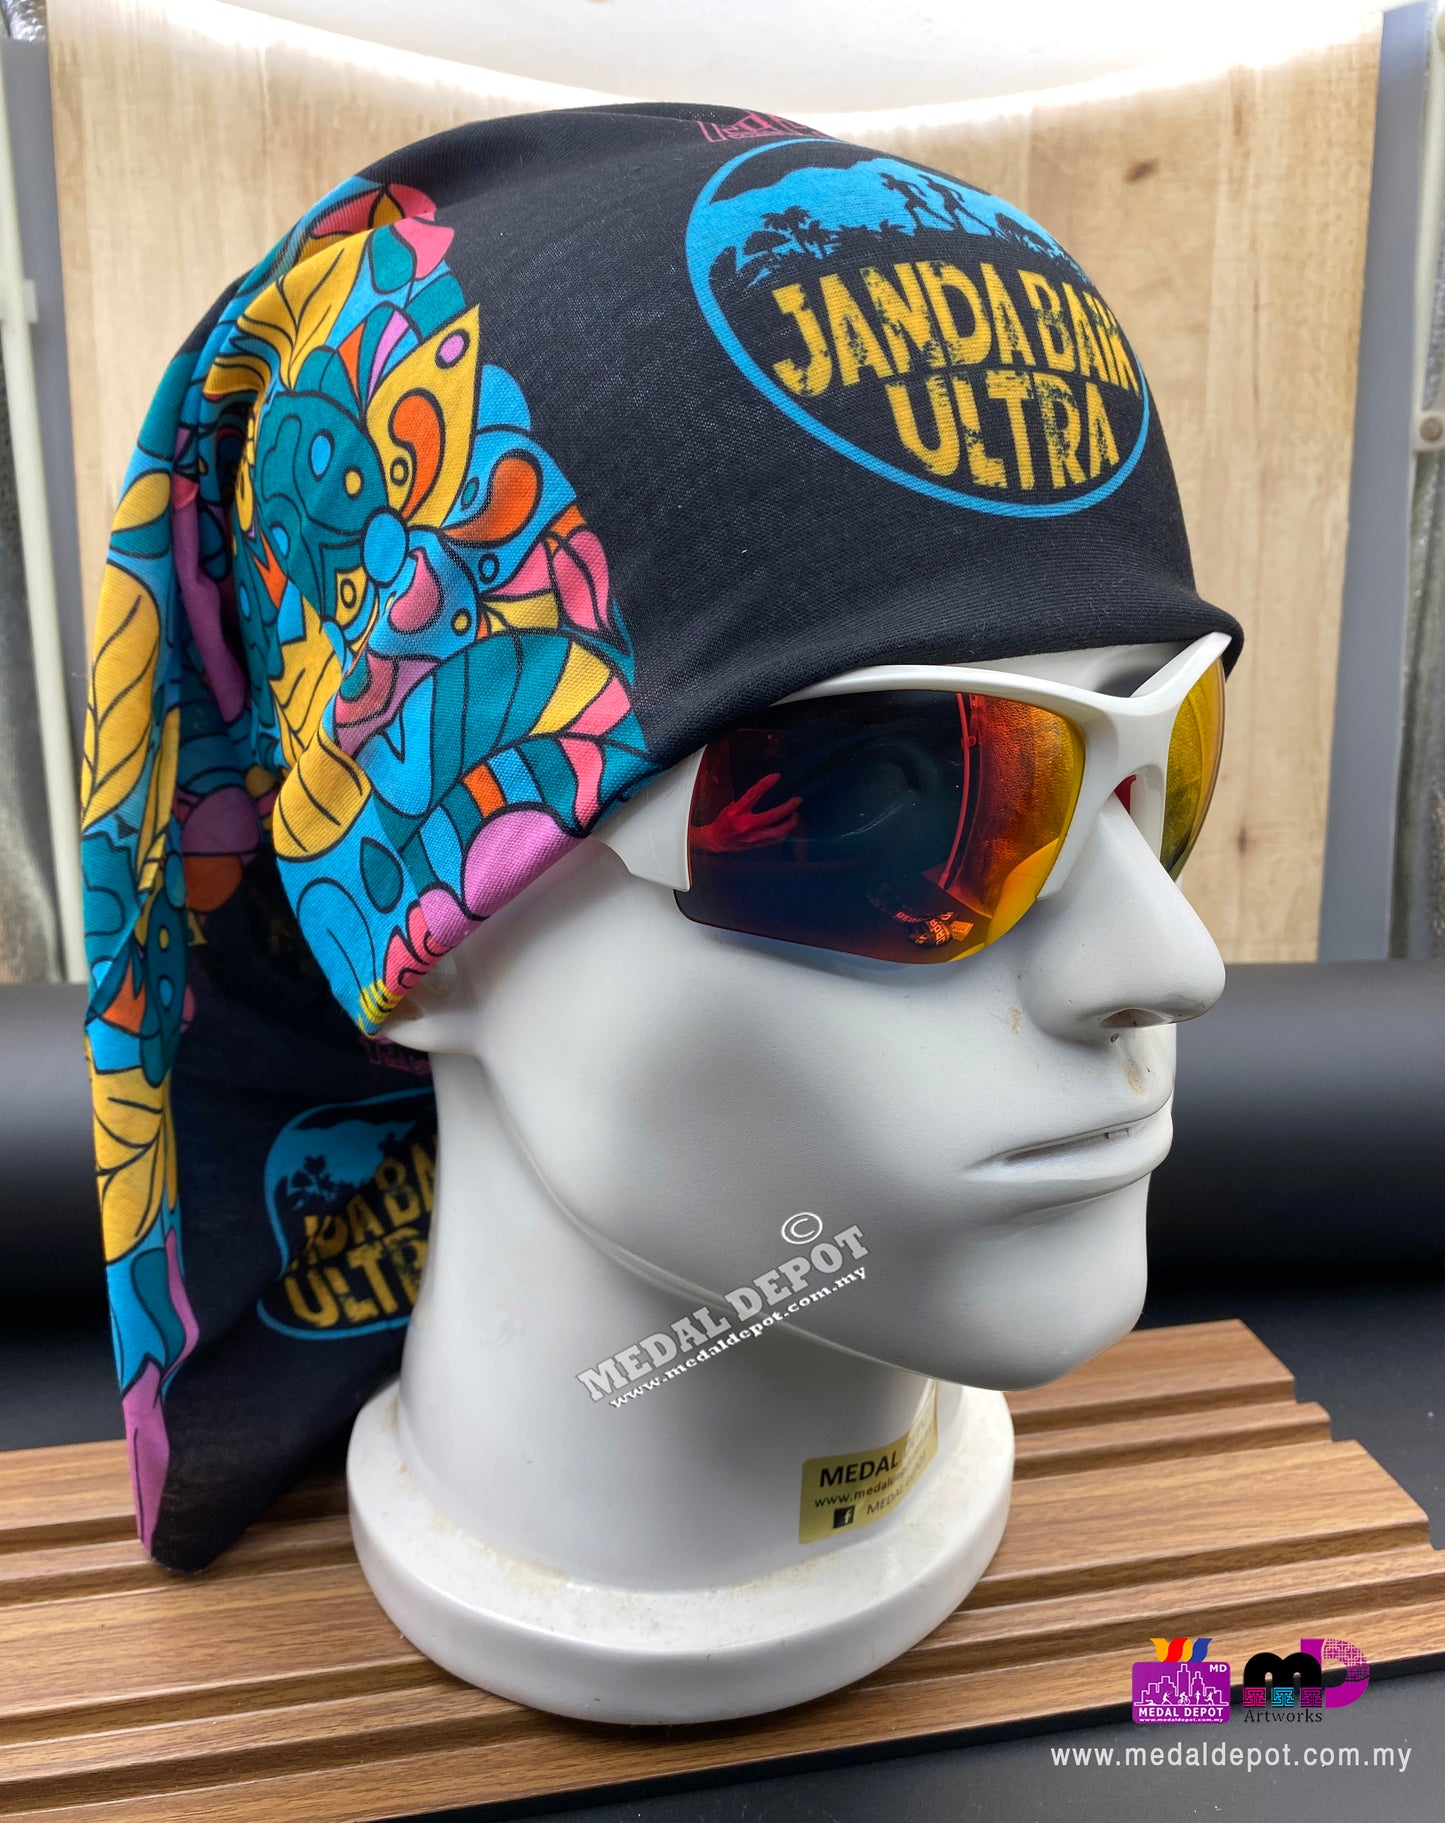 Janda Baik Ultra 2022 Headwear